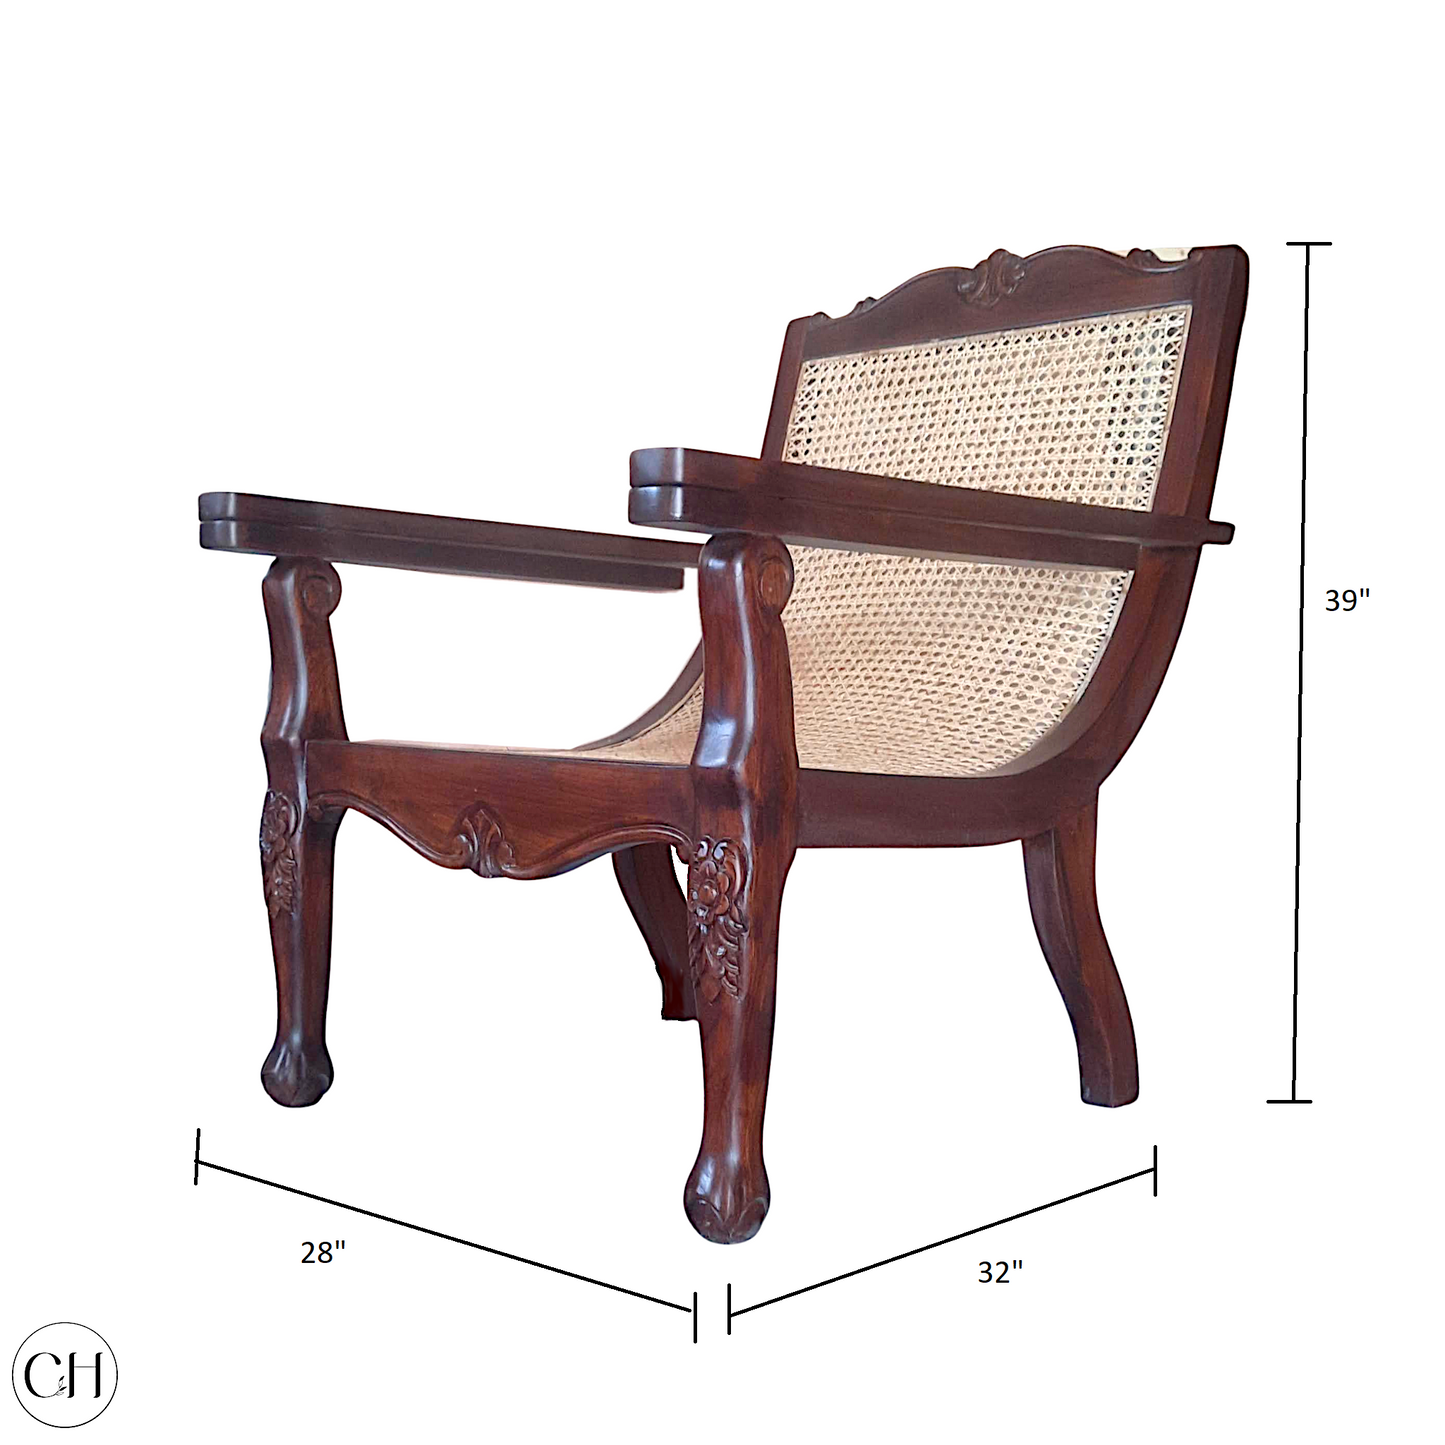 Raj - Teakwood Planters Chair with Extendable Arms - CustHum